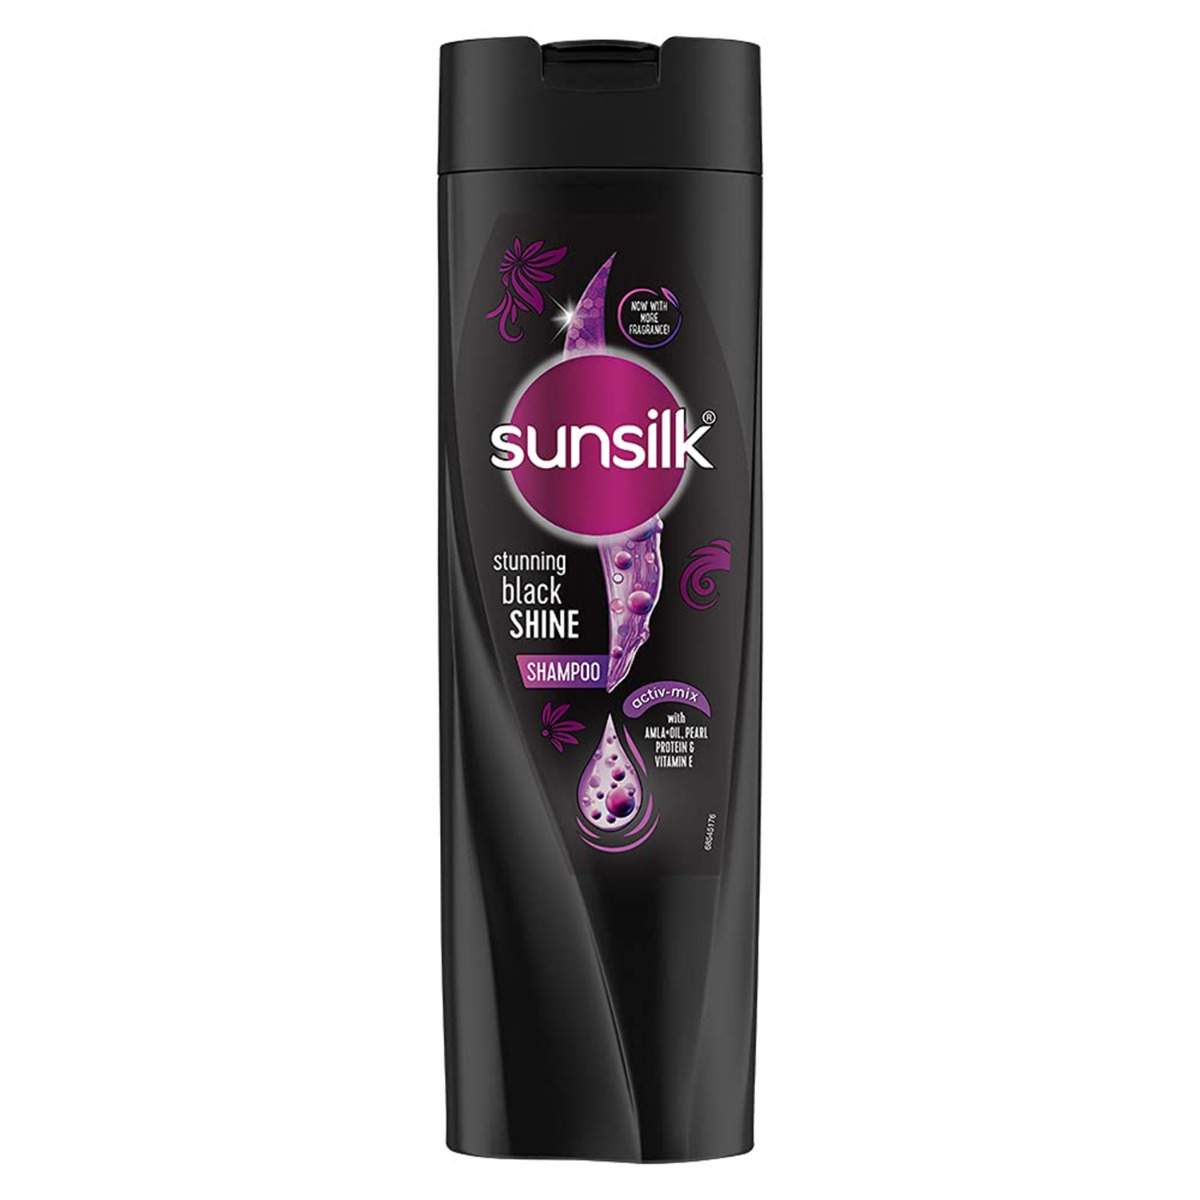 Sunsilk Stunning Black Shine Shampoo With Amla Pearl Extract, 360ml